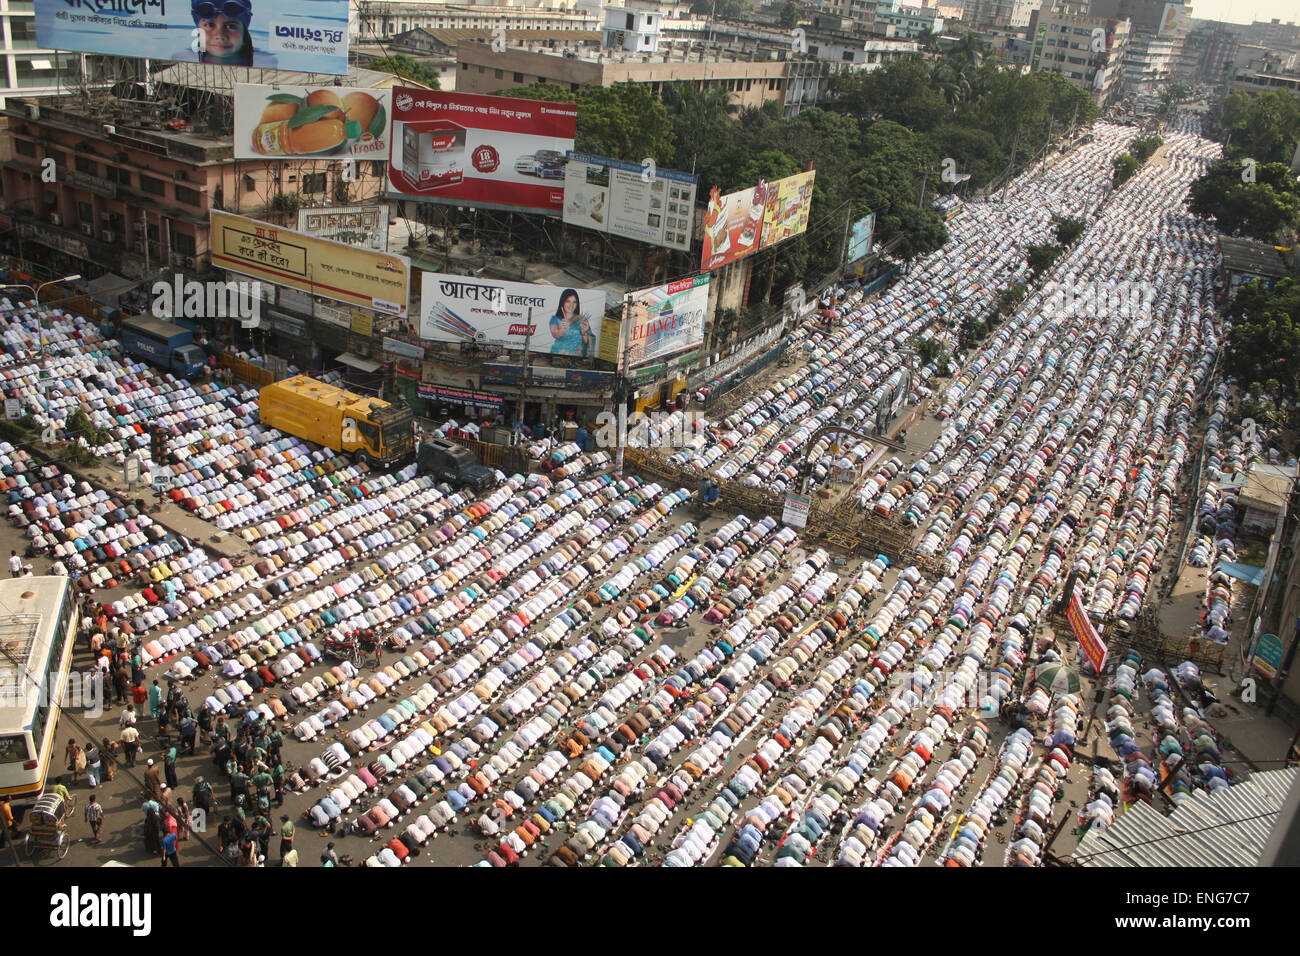 Bangladeshi supporters of the Islamic political party, Islami Andolan Bangladesh, offer Friday prayers on the streets of Dhaka. Stock Photo